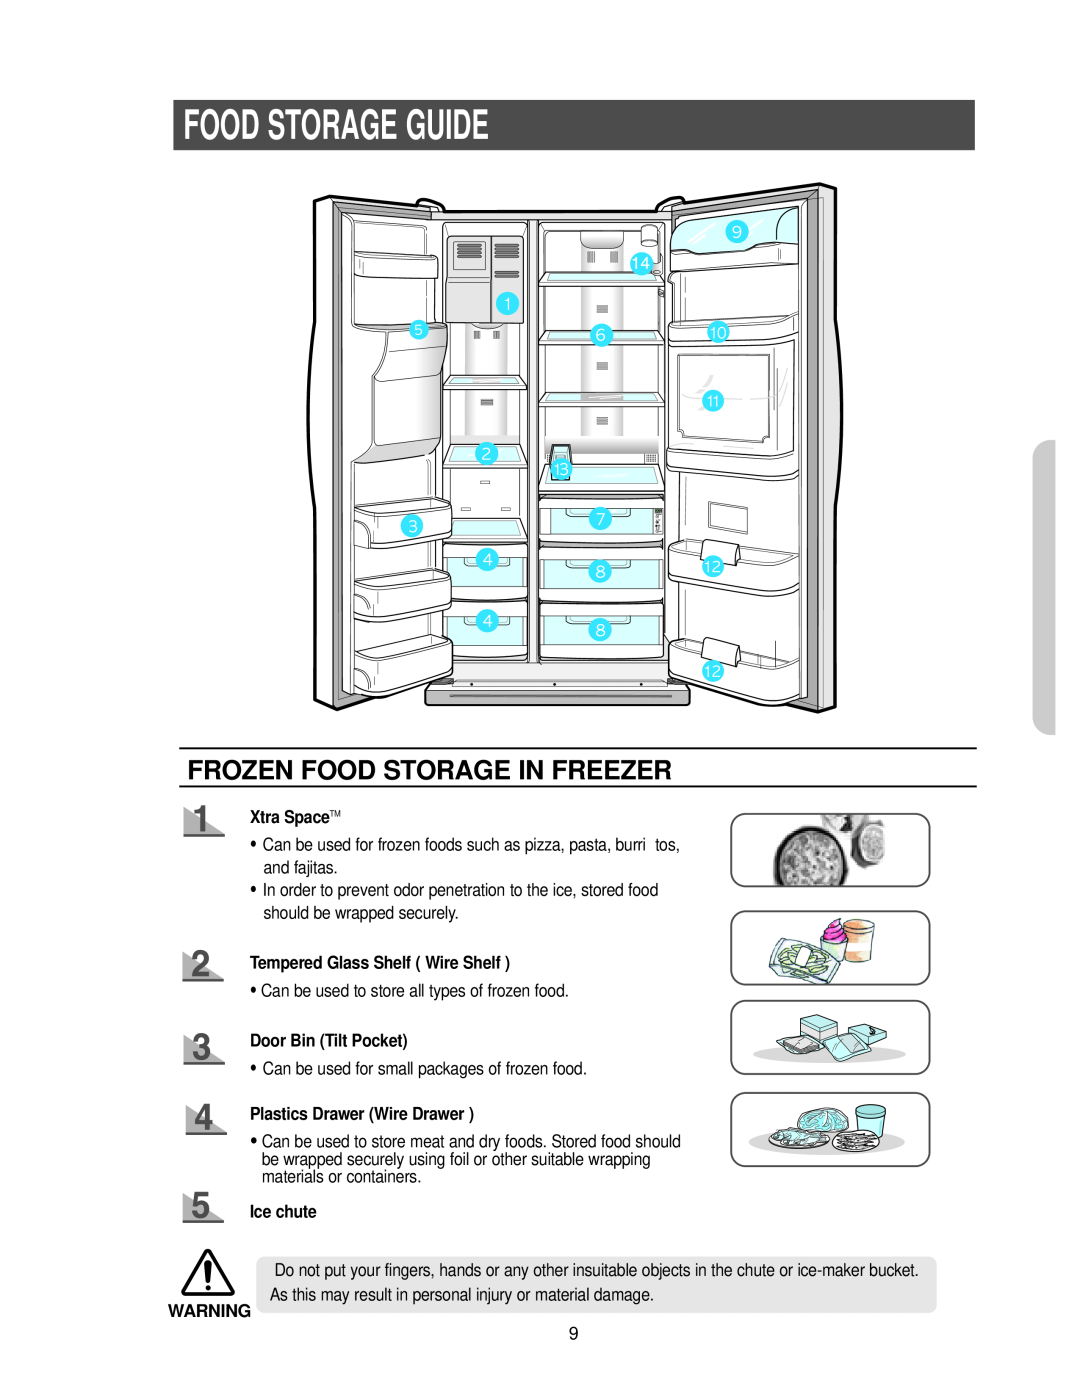 Samsung RS2533SW Food Storage Guide, Frozen Food Storage In Freezer, Xtra SpaceTM, Tempered Glass Shelf Wire Shelf 